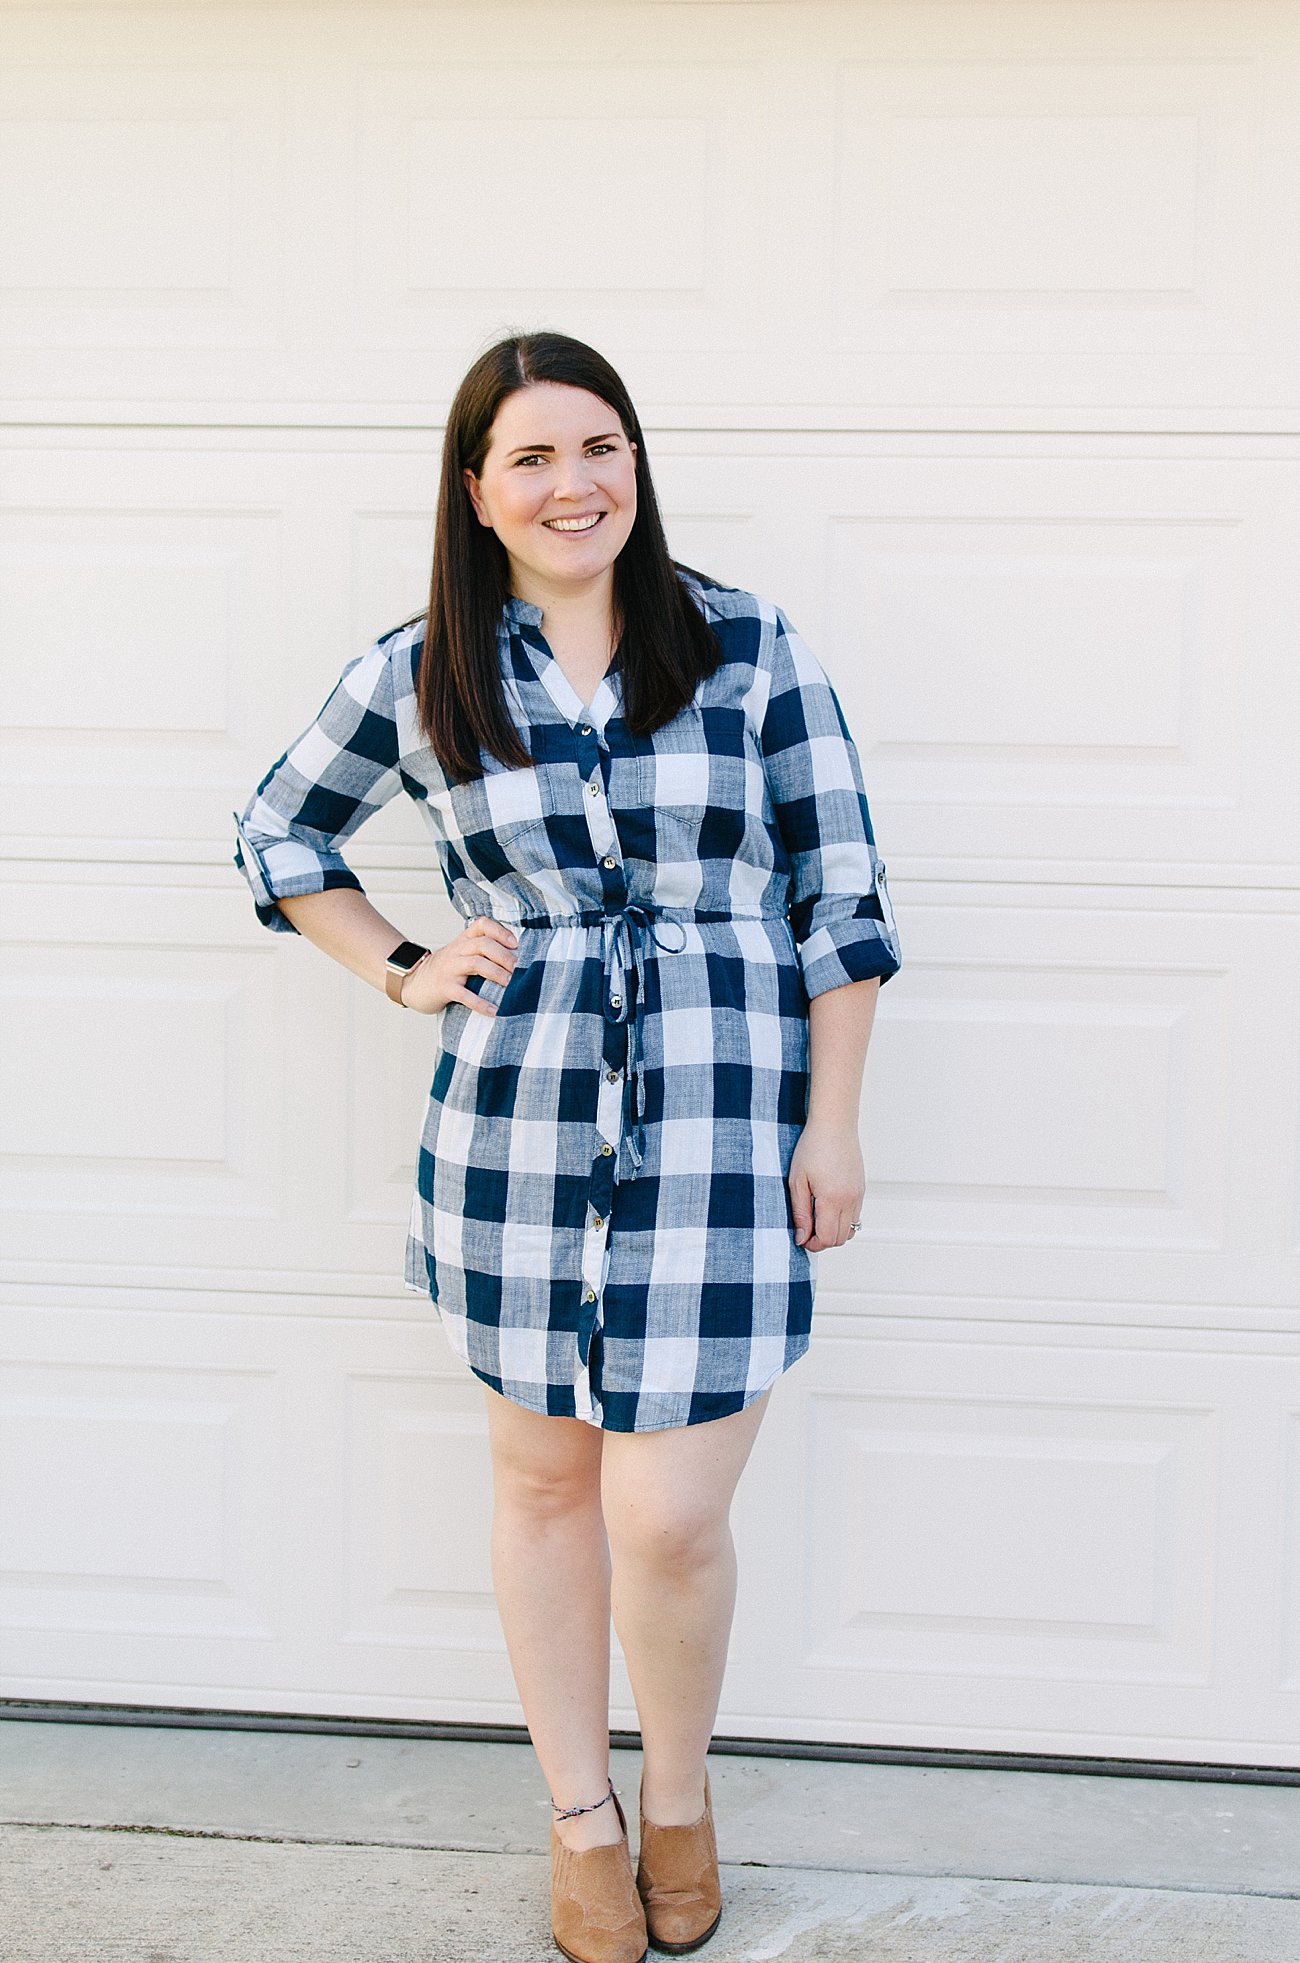 Laju Los Angeles "Tatum Cotton Shirt Dress" - Size XL - $78 - Stitch Fix Review #48 by North Carolina ethical fashion blogger Still Being Molly